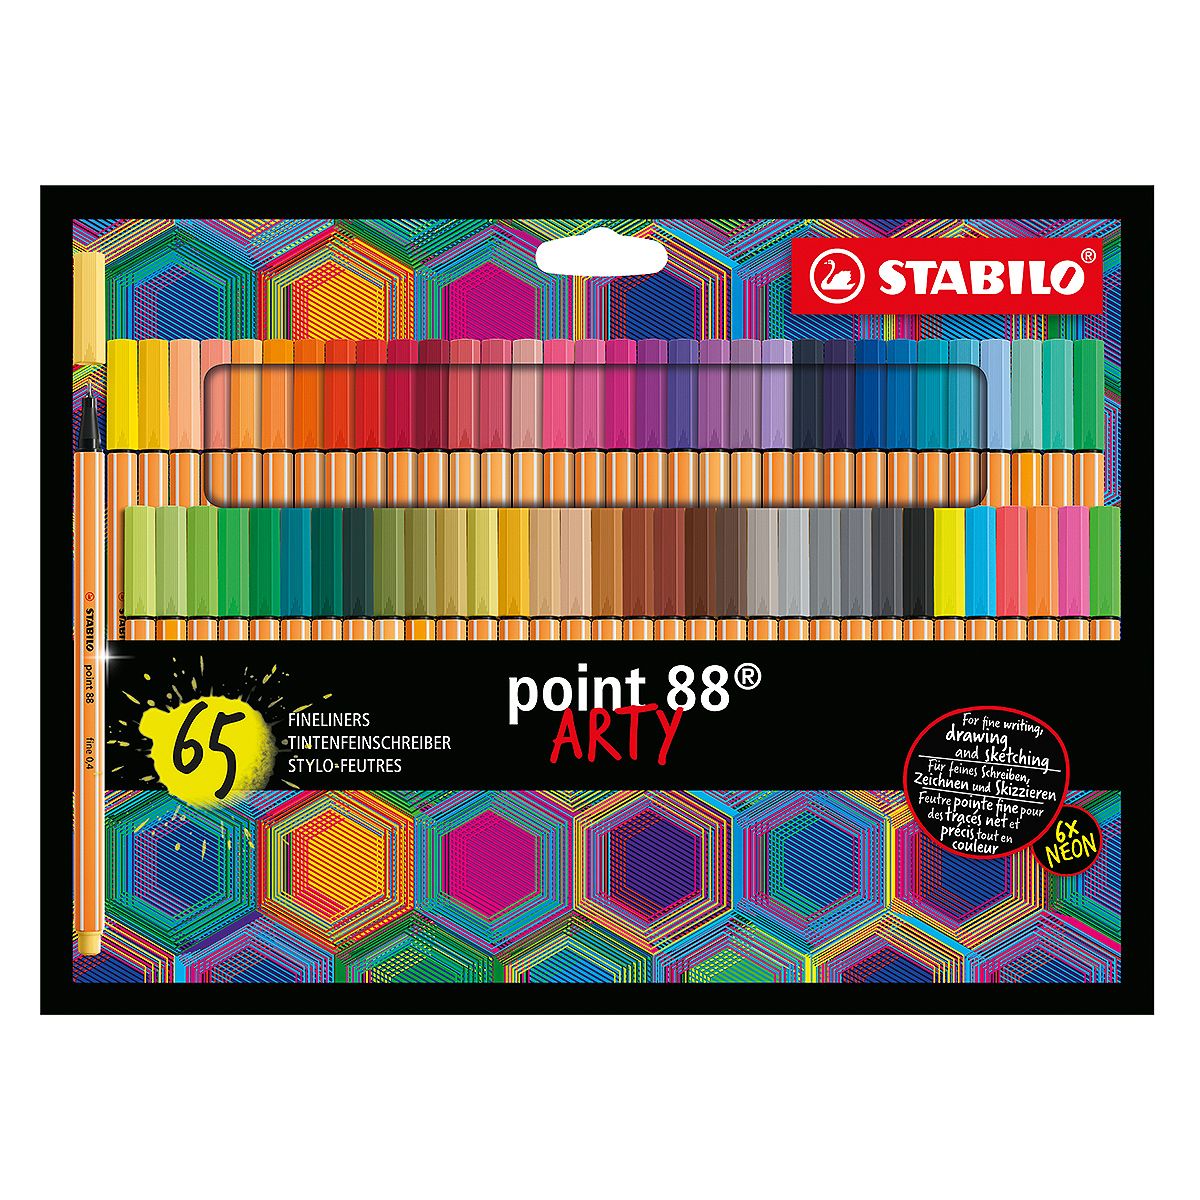 https://www.jerrysartarama.com/media/catalog/product/cache/ecb49a32eeb5603594b082bd5fe65733/s/t/stabilo-point-88-arty-wallet-fineliner-color-pen-set-65-m2-main_1.jpg